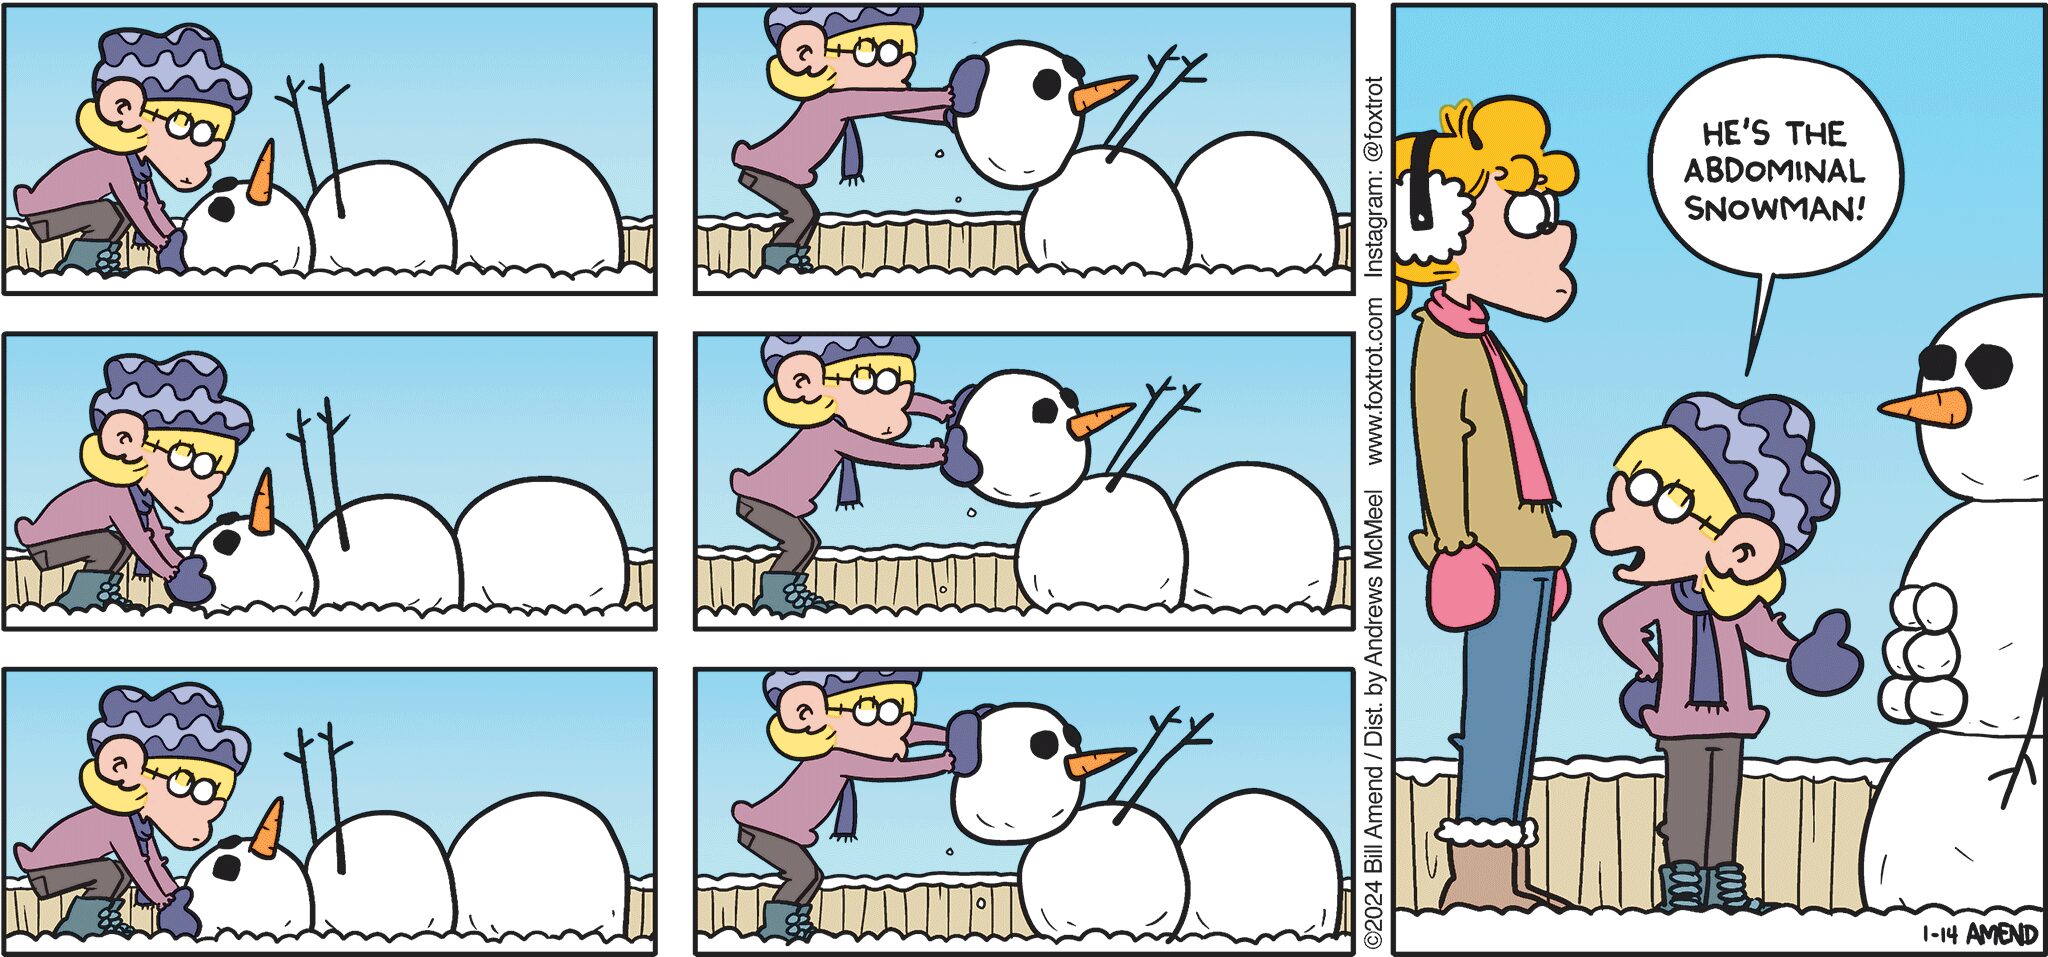 FoxTrot comic strip by Bill Amend - "Cold’s Gym" published January 14, 2024 - Transcript: Jason Fox: He's the Abdominal Snowman!